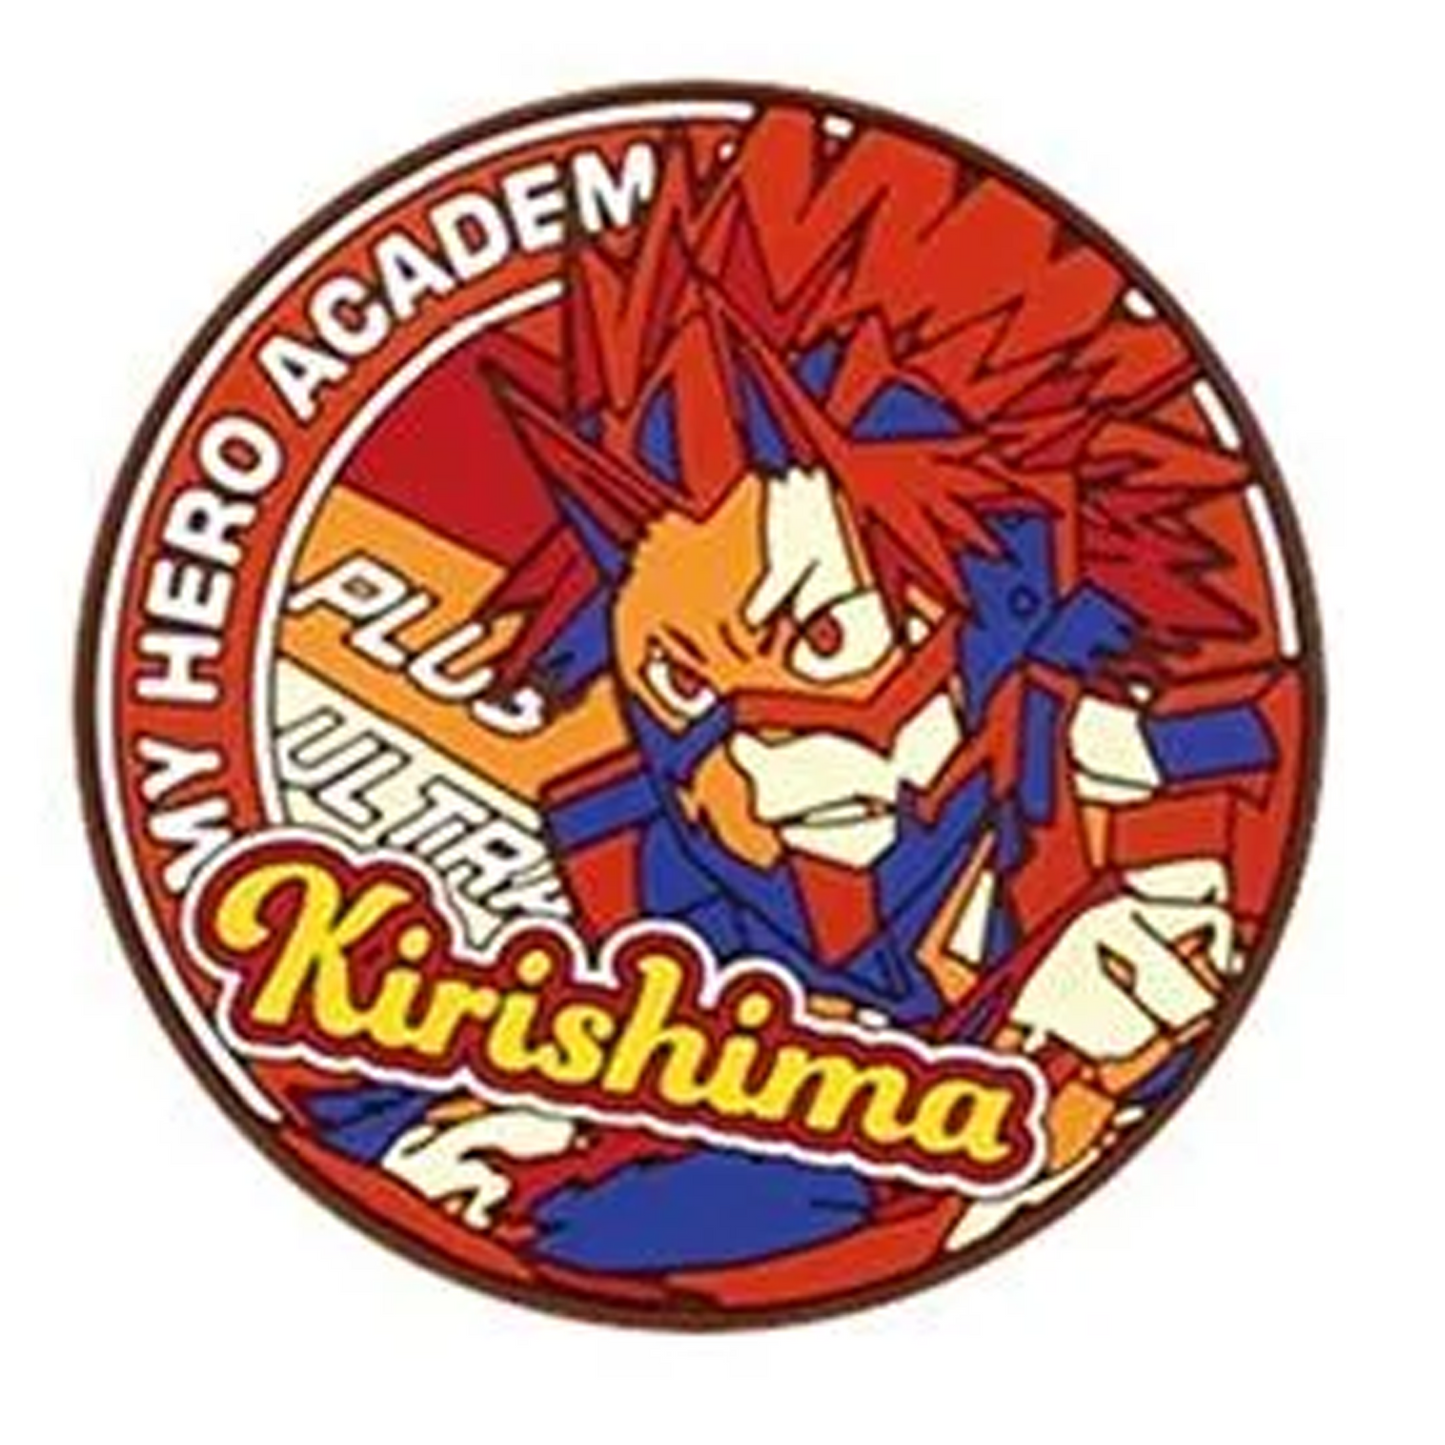 My Hero Academia Rubber Coaster Gachapon Capsule Toy (Kirishima) | Happy Piranha